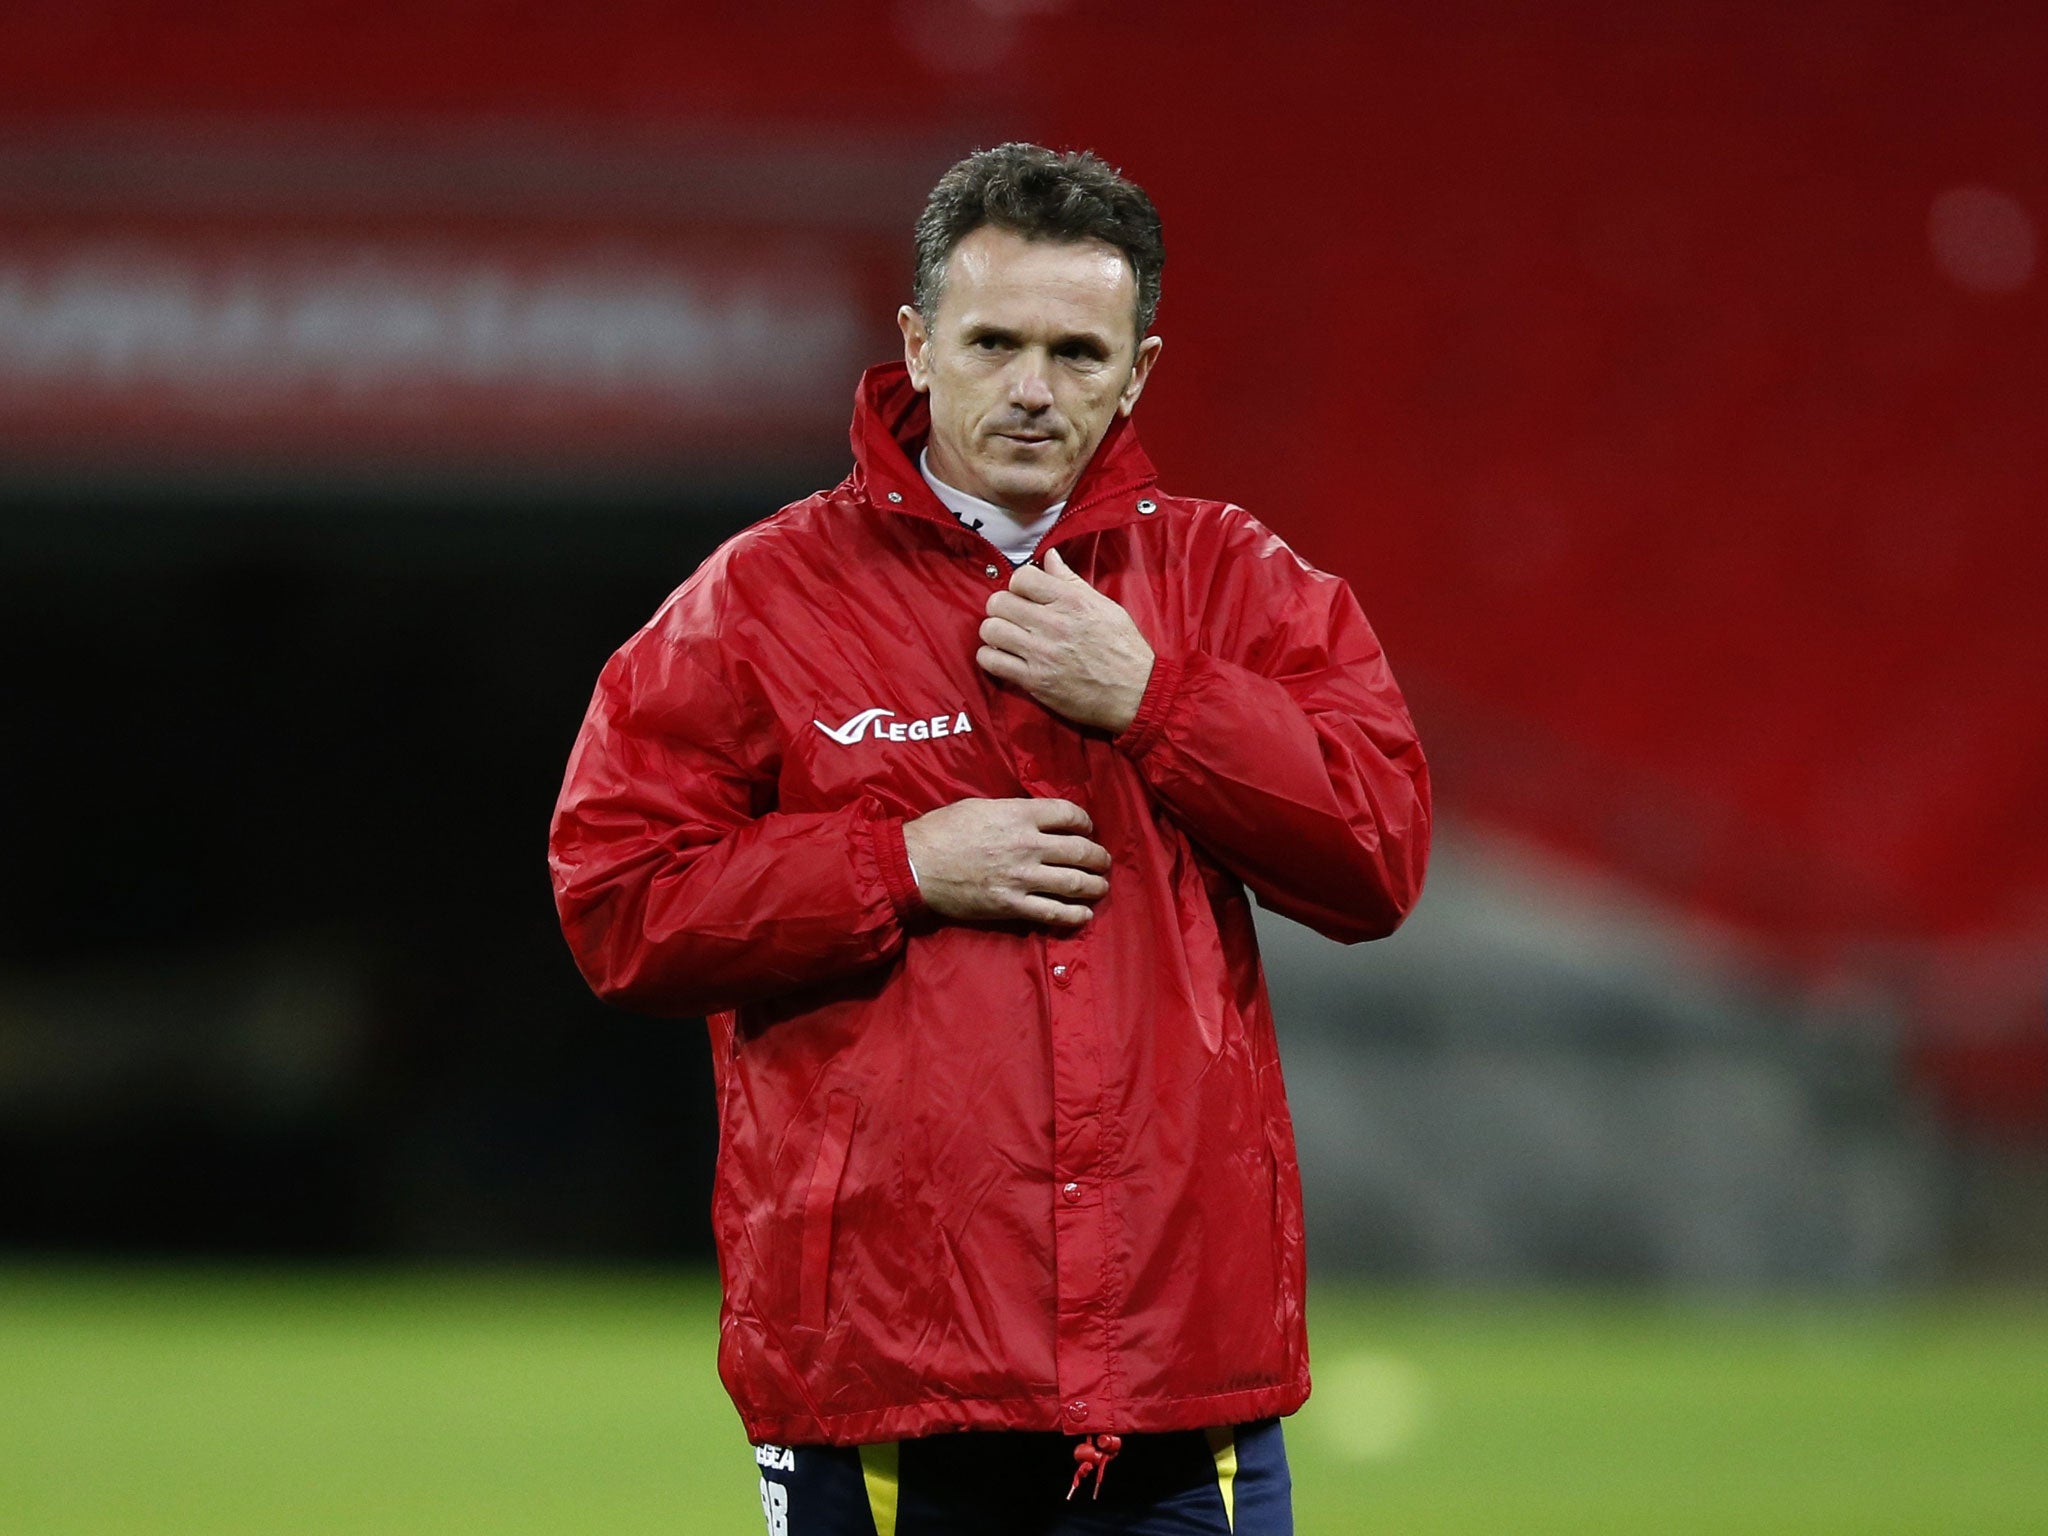 Montenegro's Branko Brnovic watches training at Wembley